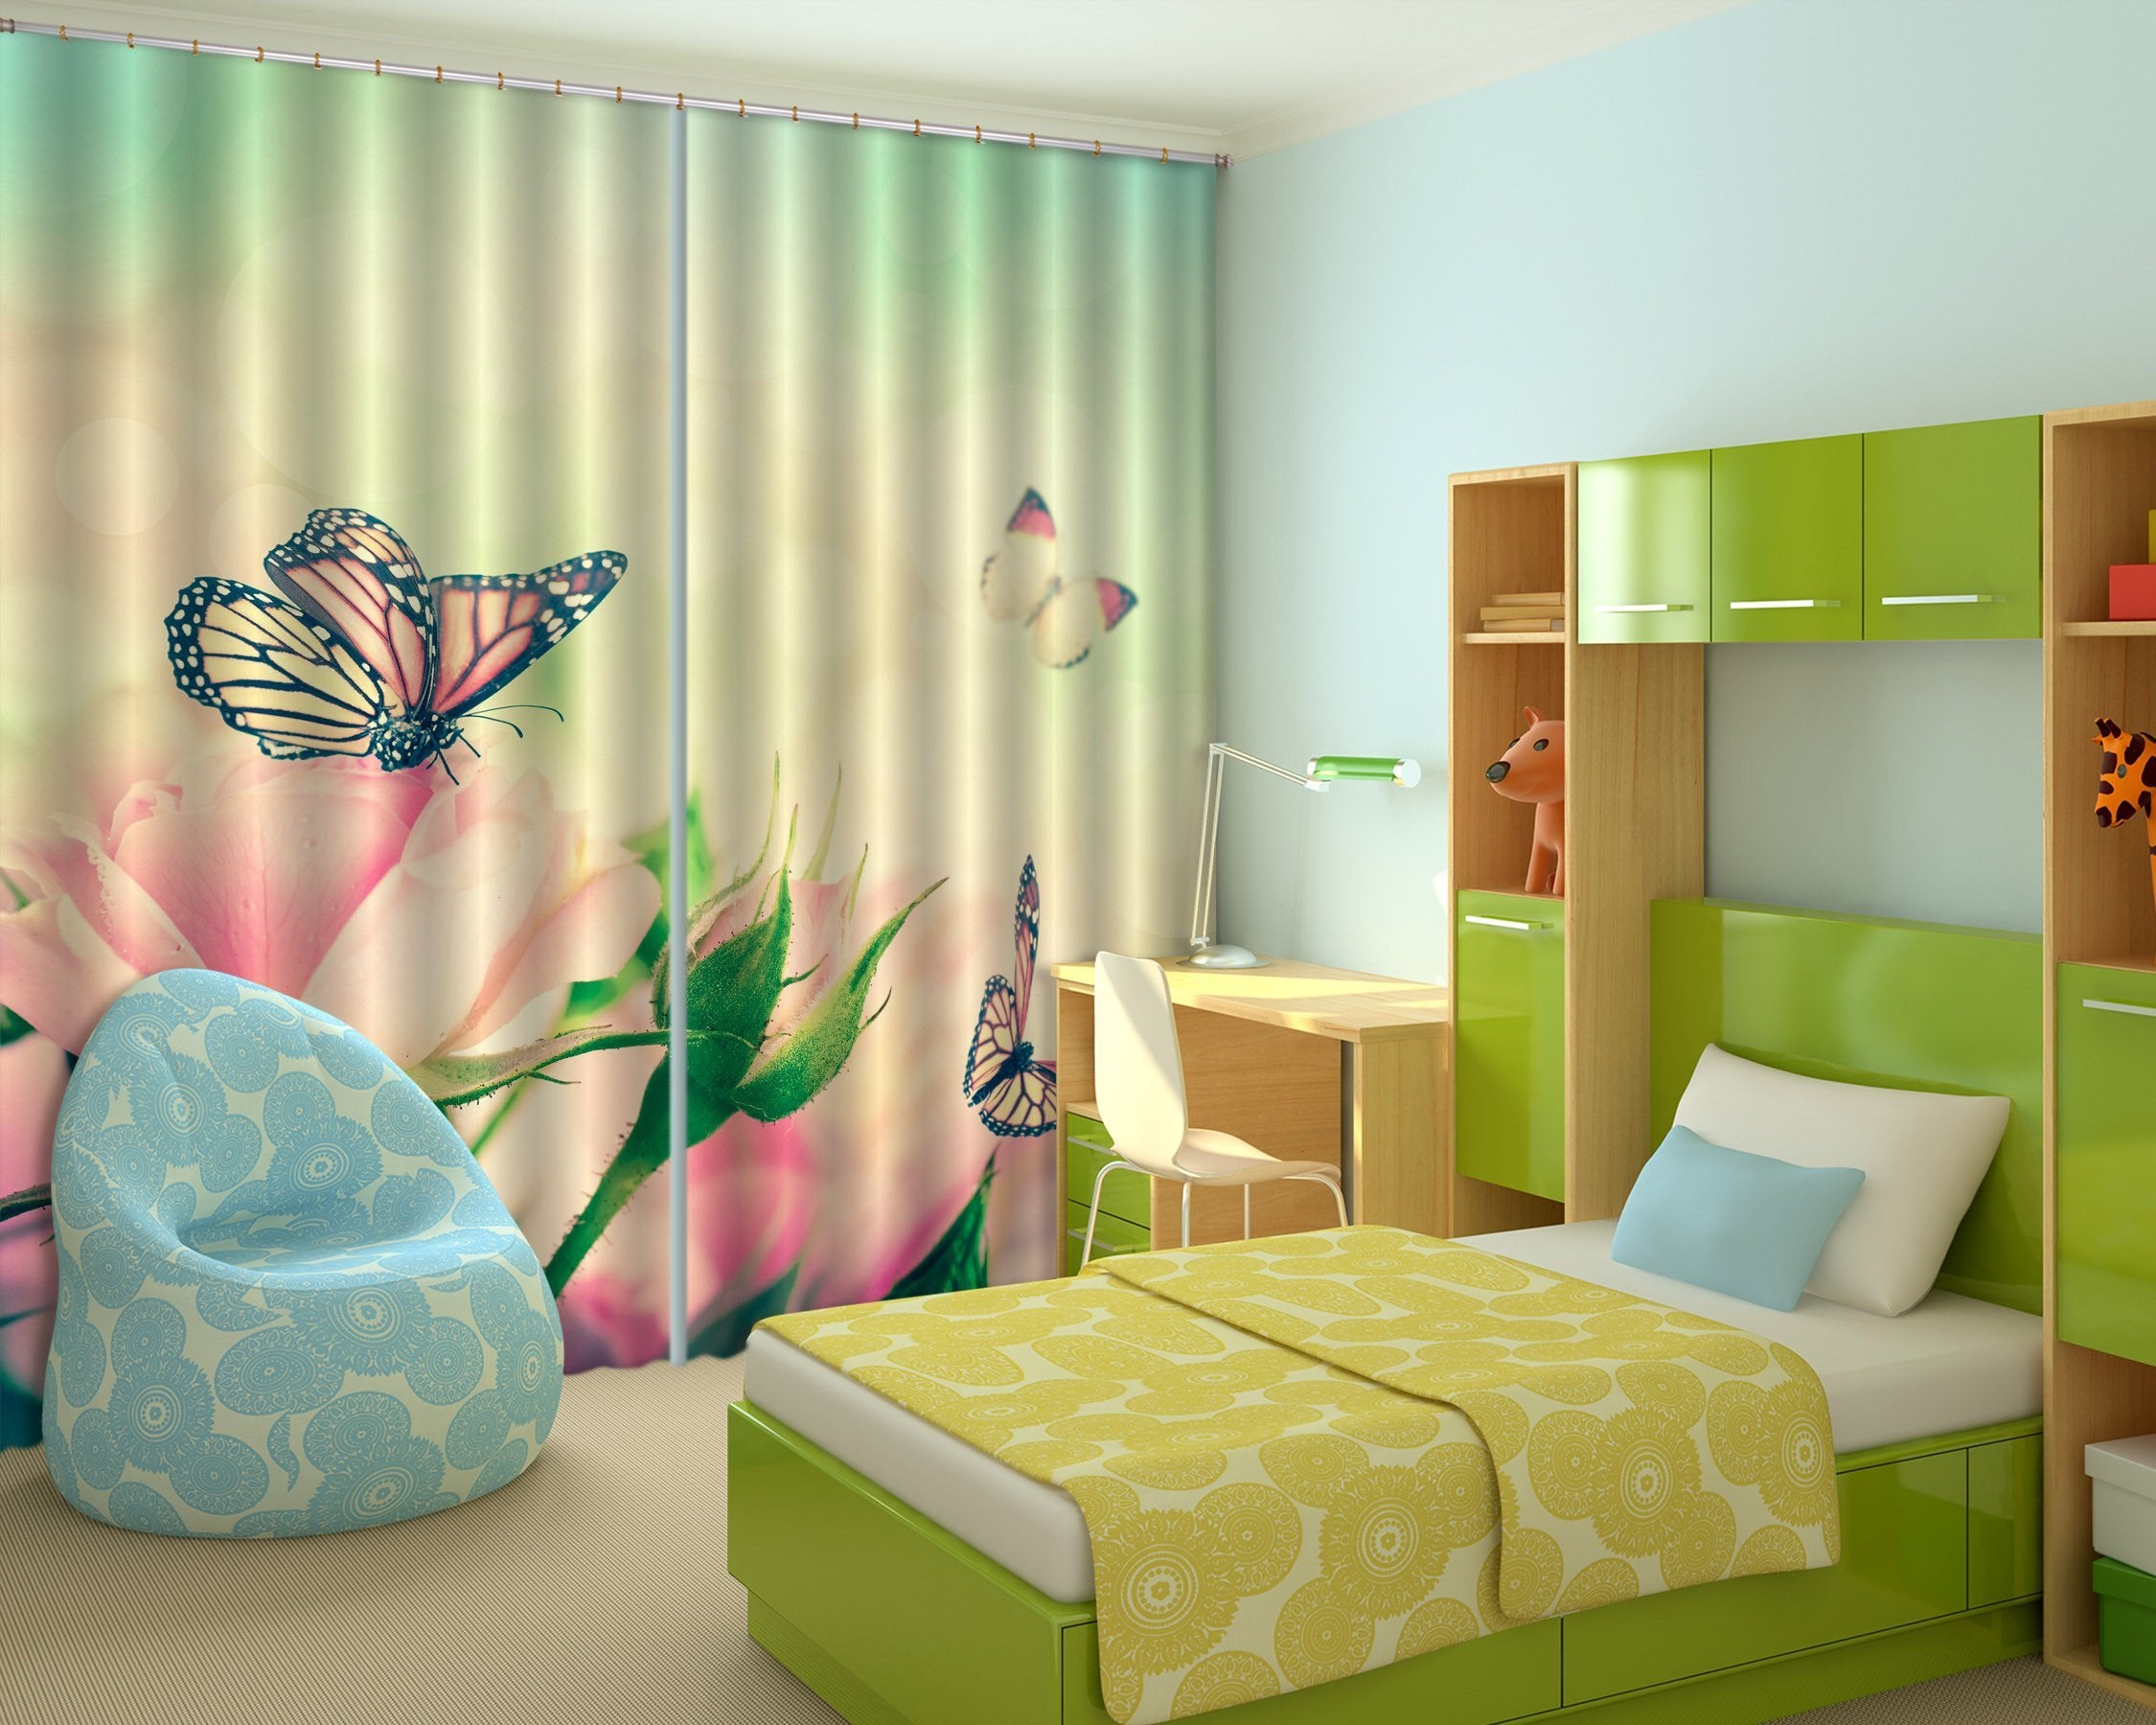 3D Pretty Flowers Butterflies 611 Curtains Drapes Wallpaper AJ Wallpaper 